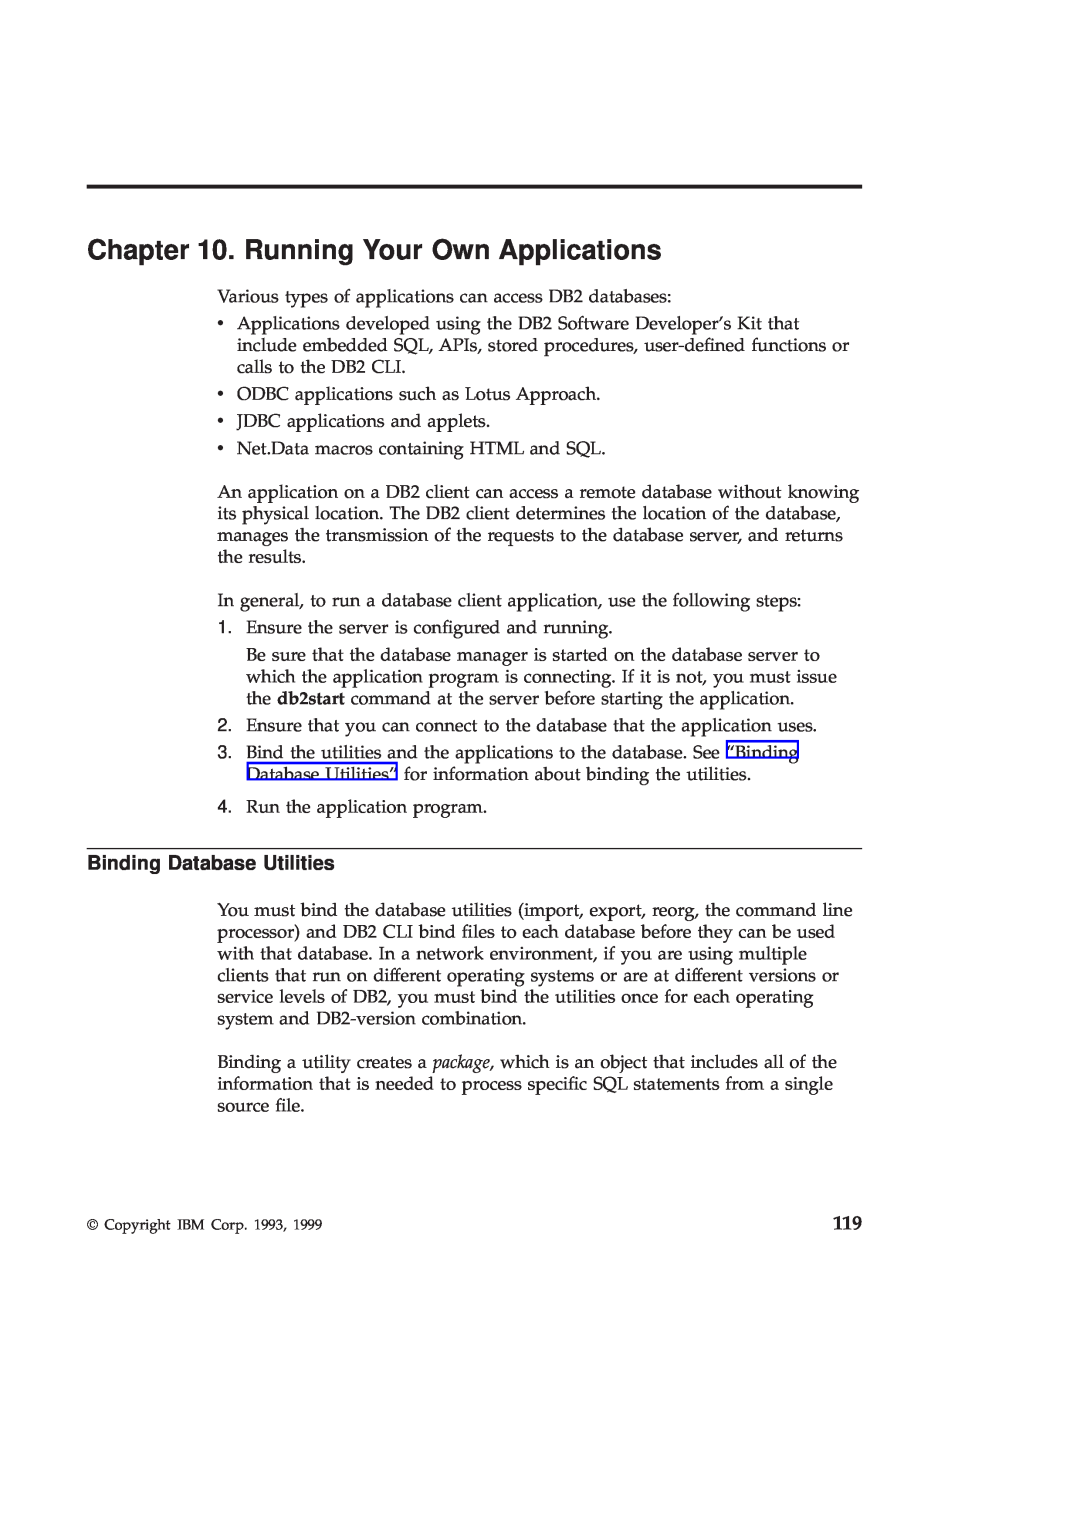 IBM GC09-2830-00 manual Running Your Own Applications, Binding Database Utilities 